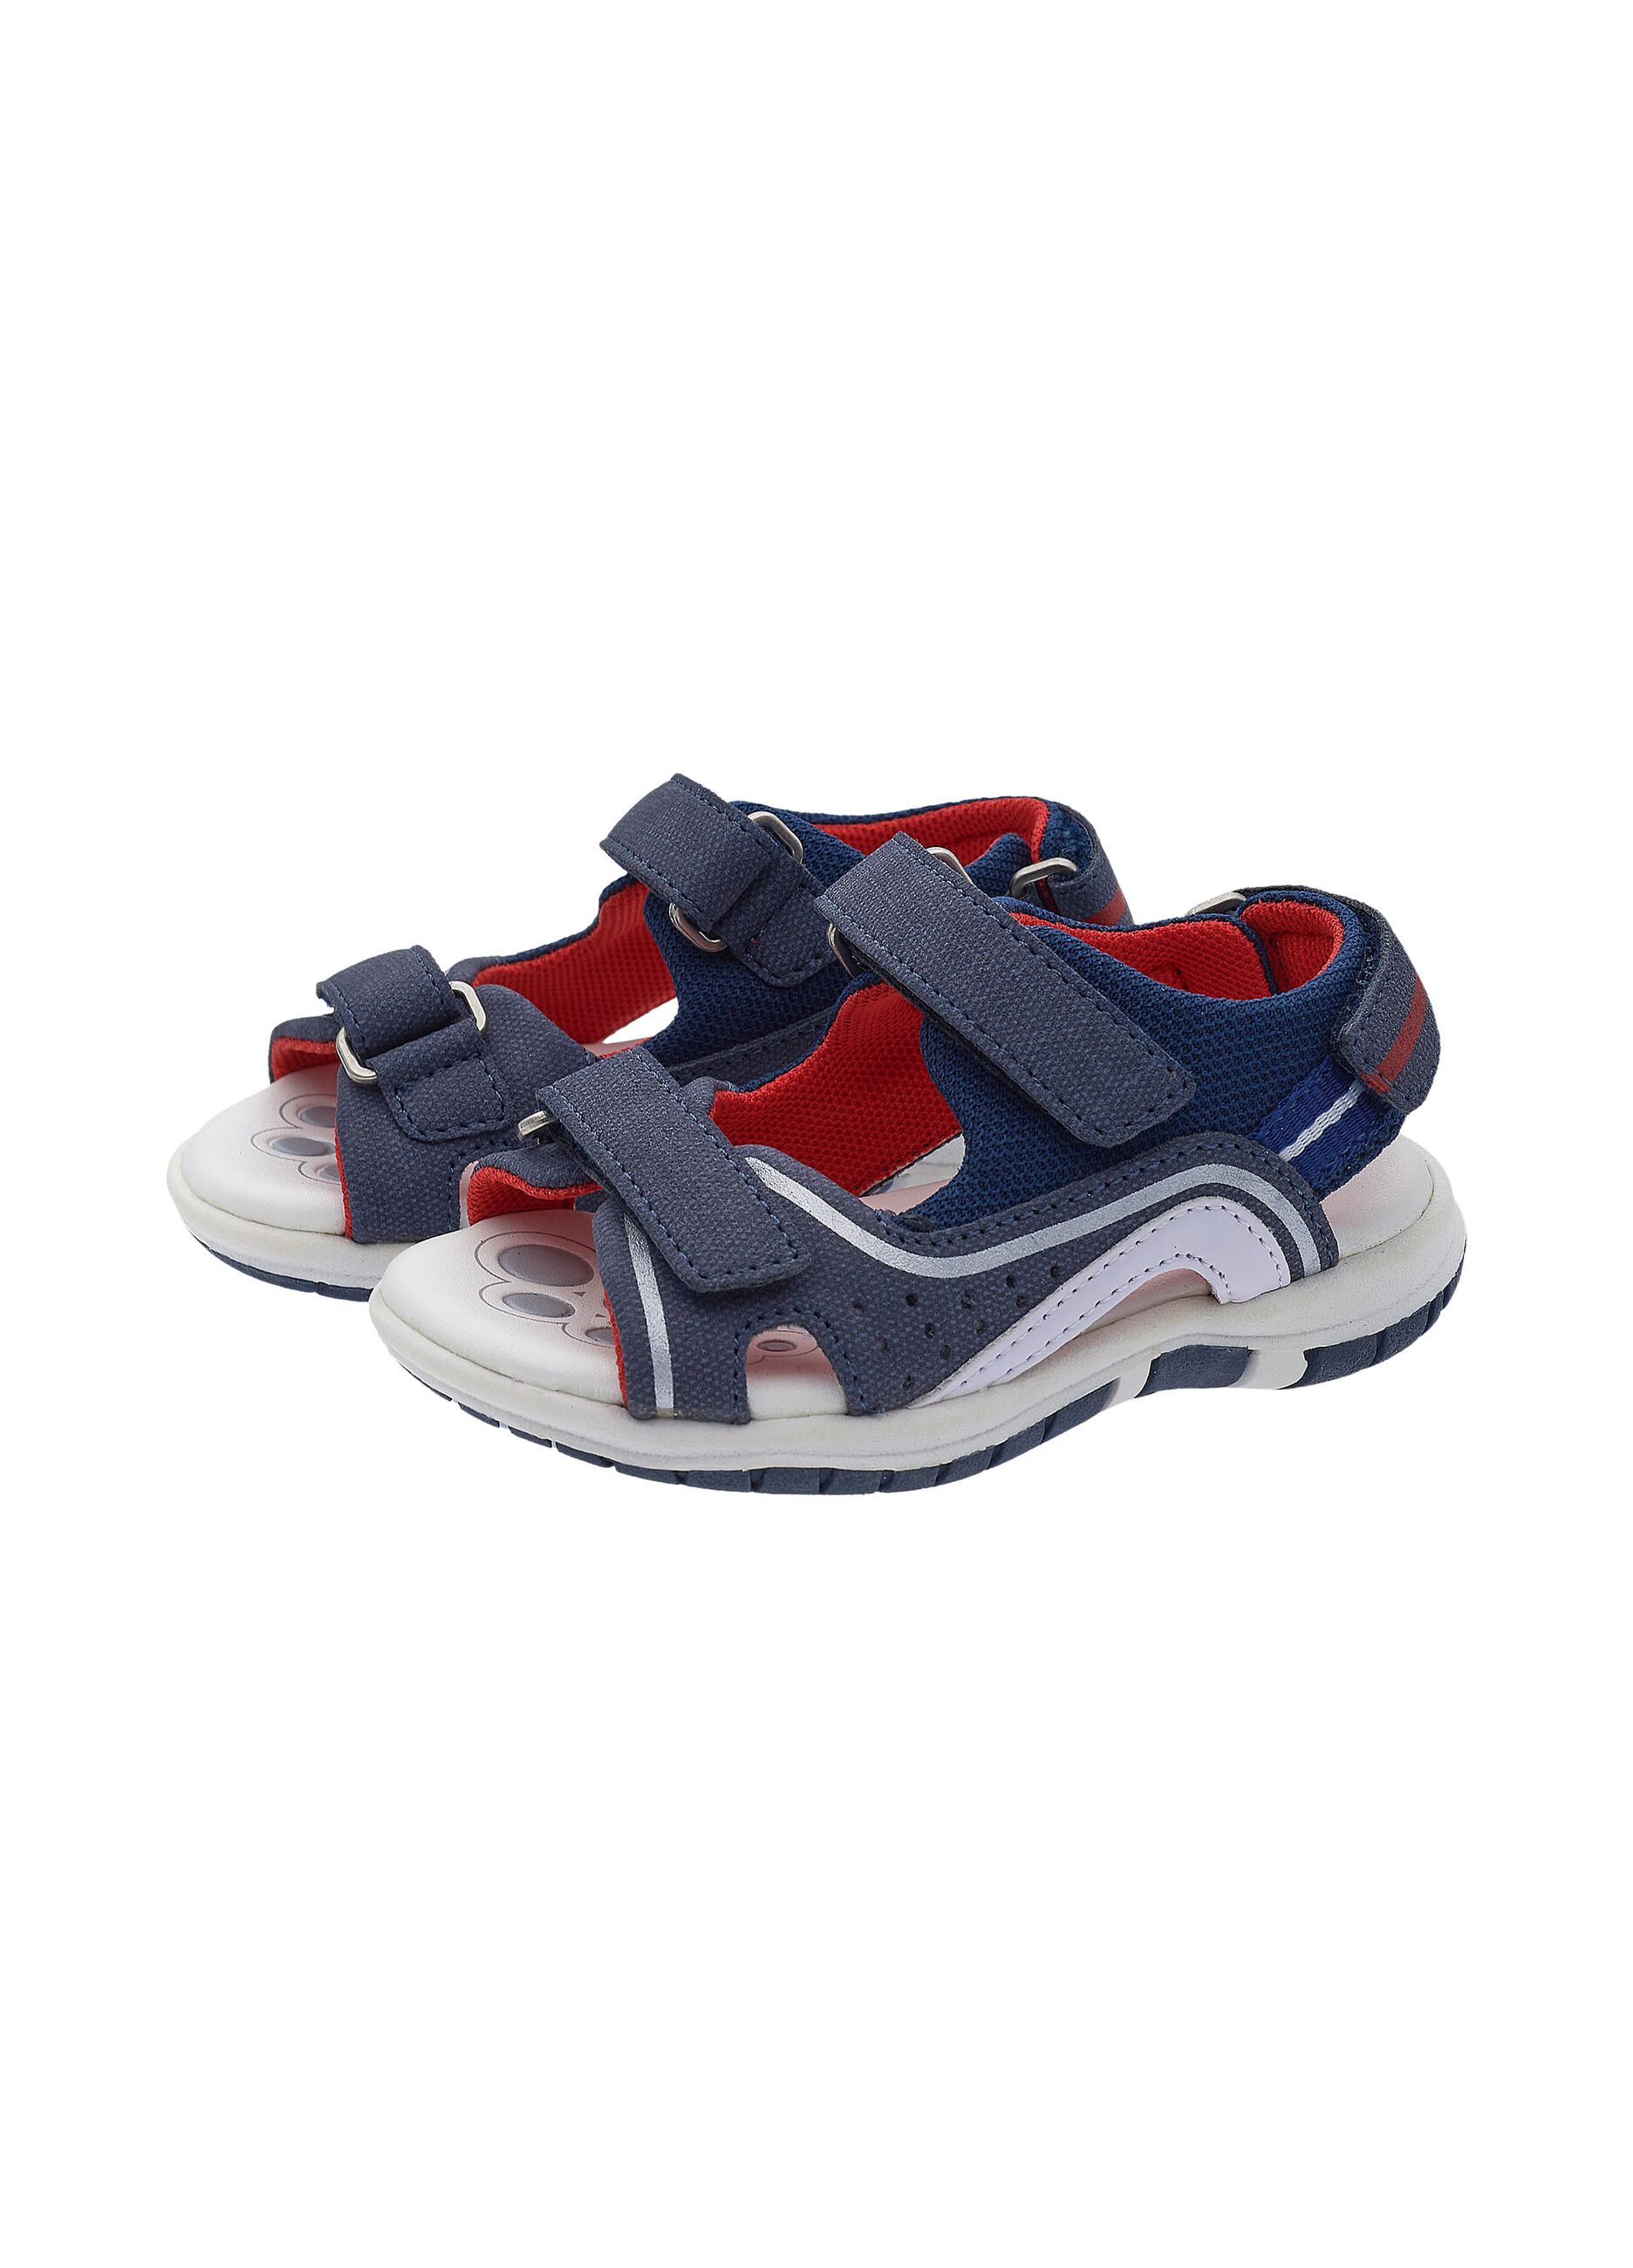 Franklin colourblock sandals with double Velcro strap